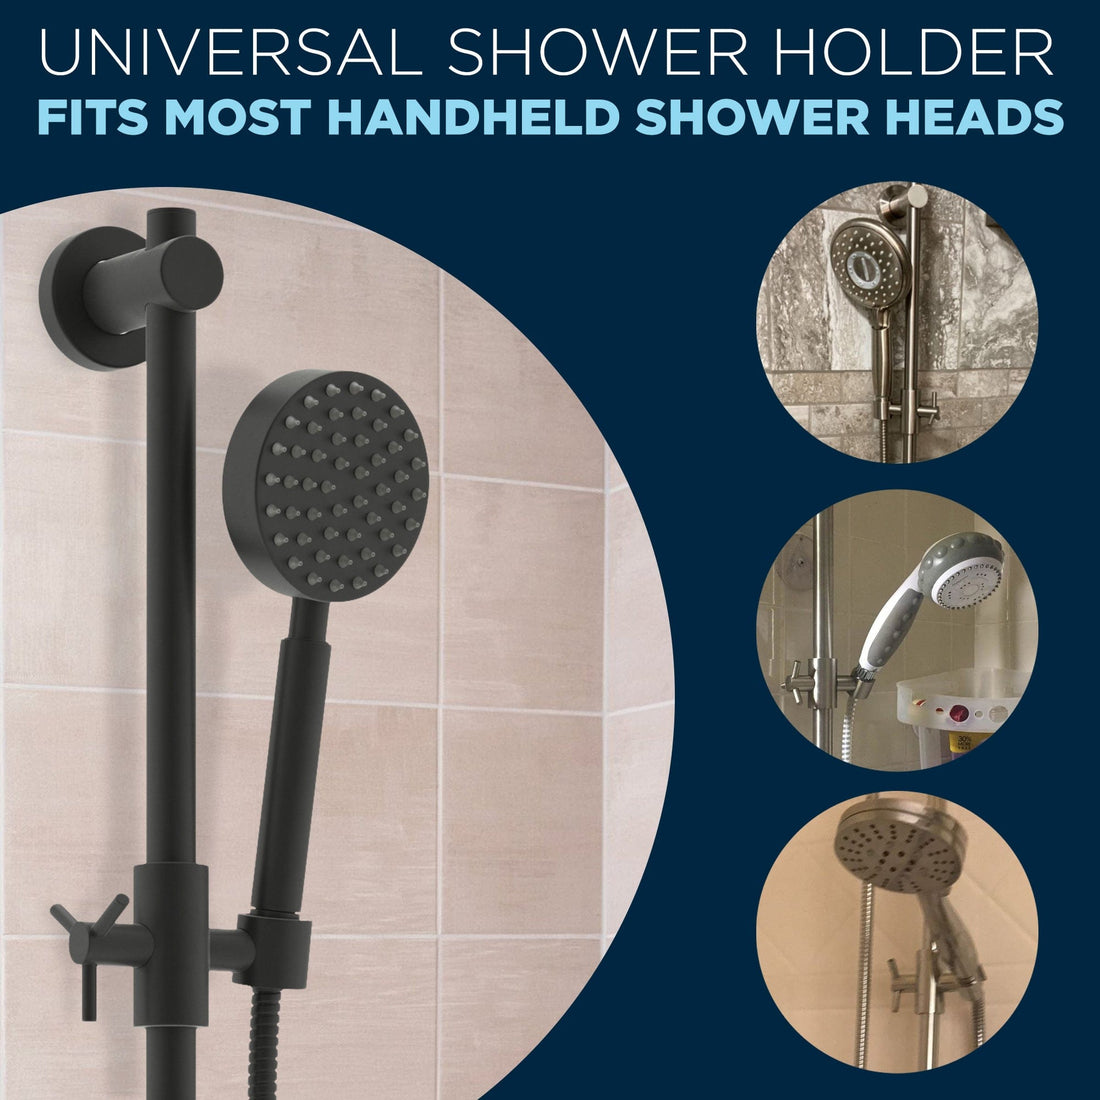 Universal Shower Holder Fits Most Handheld Shower Heads Slide Bar Matte Black - The Shower Head Store